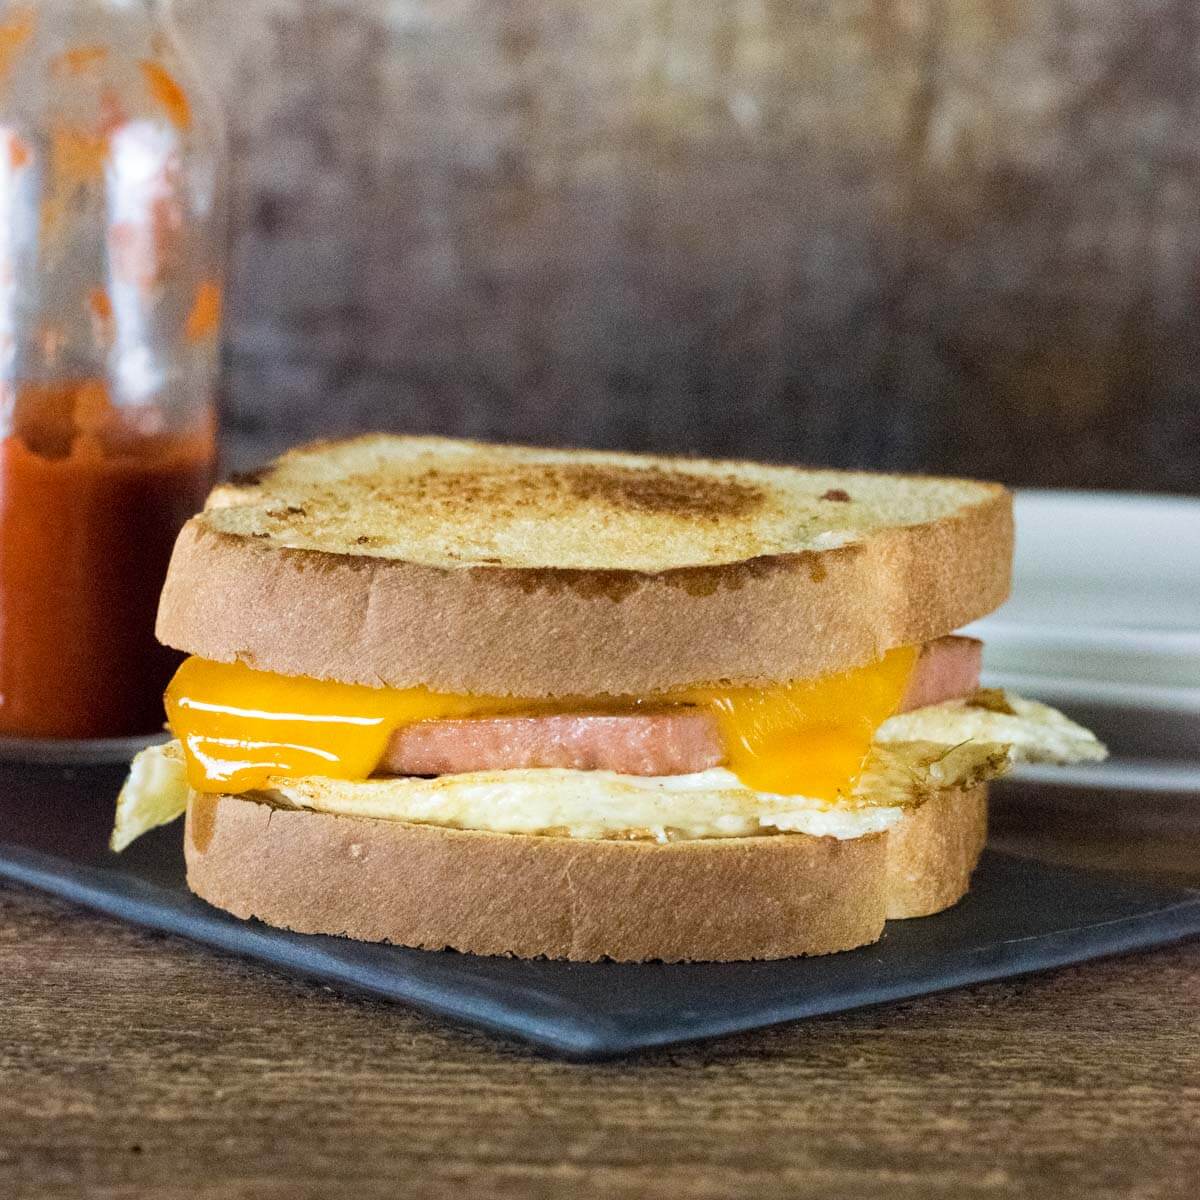 https://www.foxvalleyfoodie.com/wp-content/uploads/2020/07/spam-sandwich-recipe.jpg